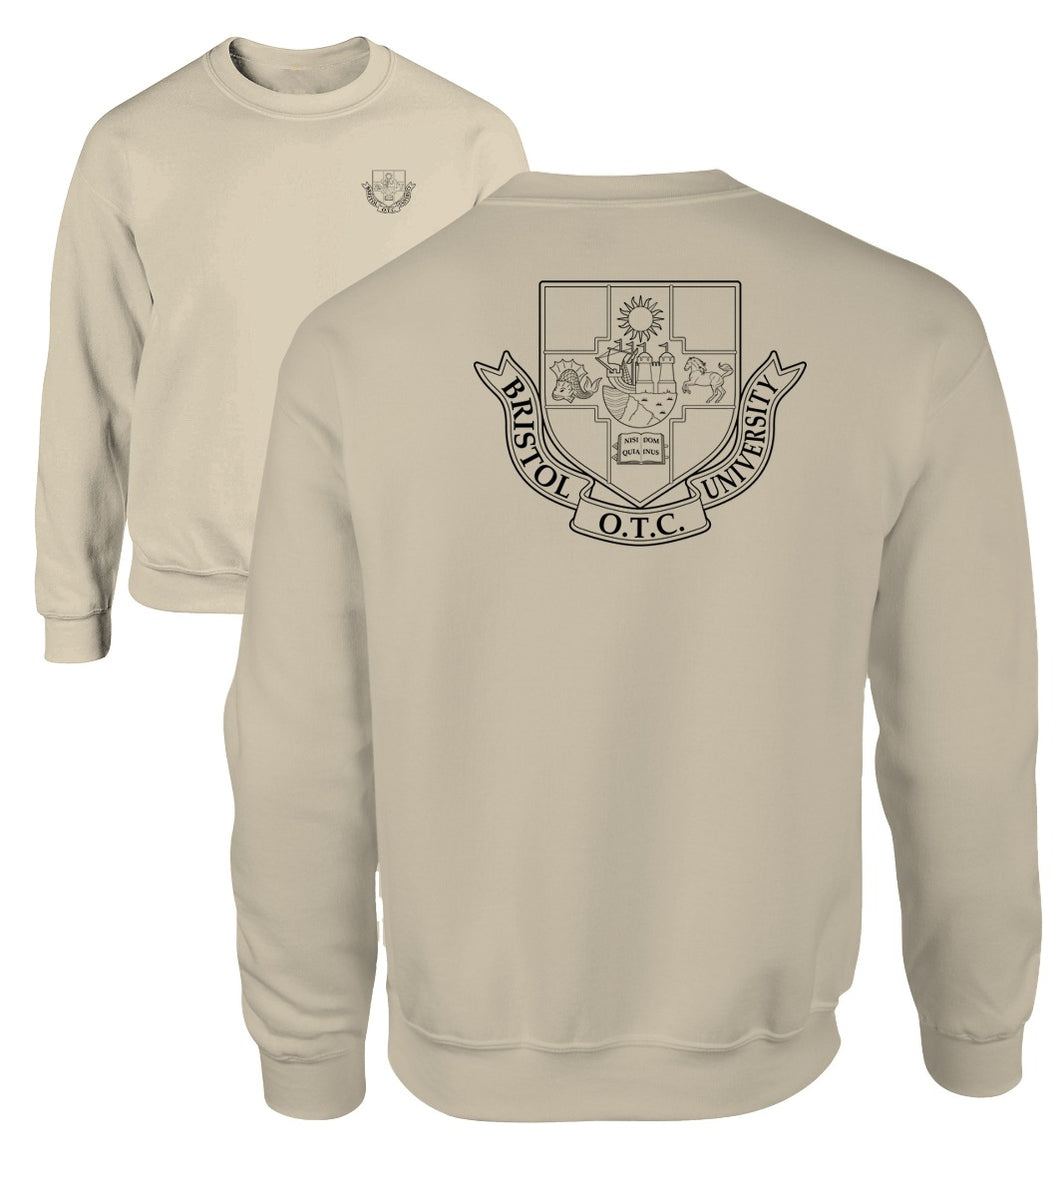 Double Printed Bristol (UOTC) Sweatshirt